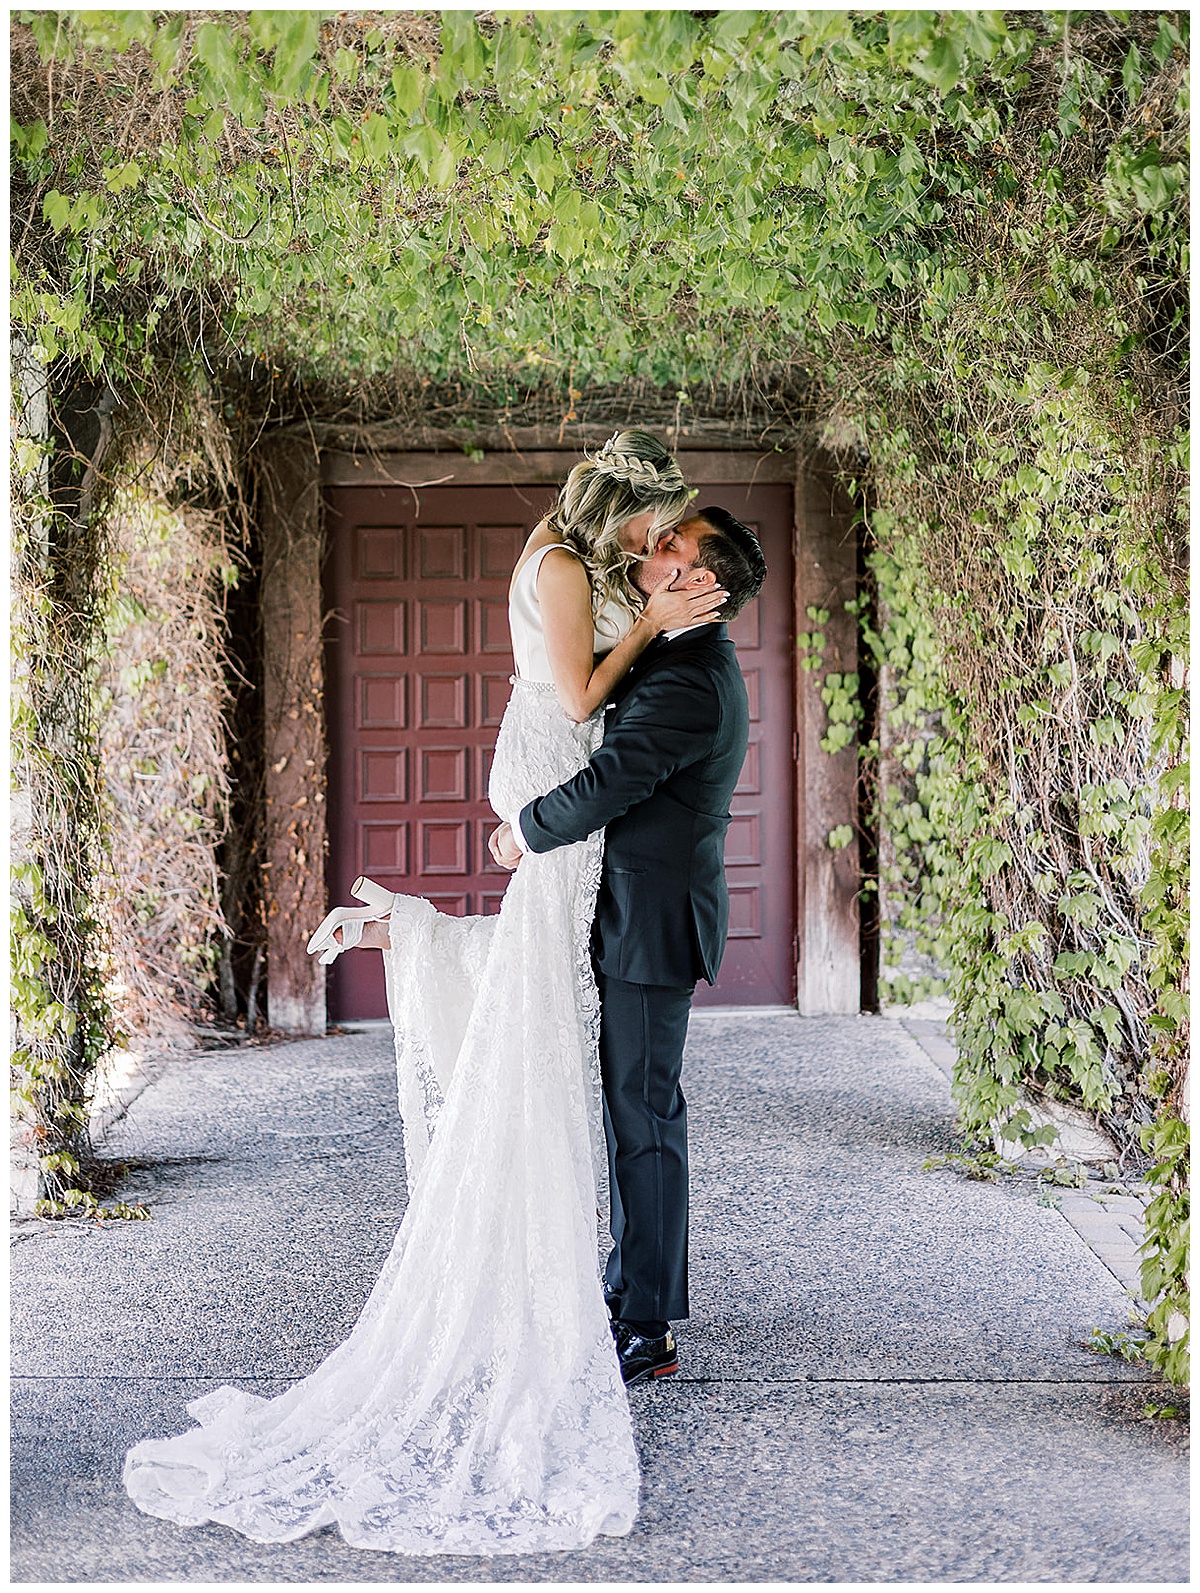 Man and woman share a kiss for Kayla Bouren Photography